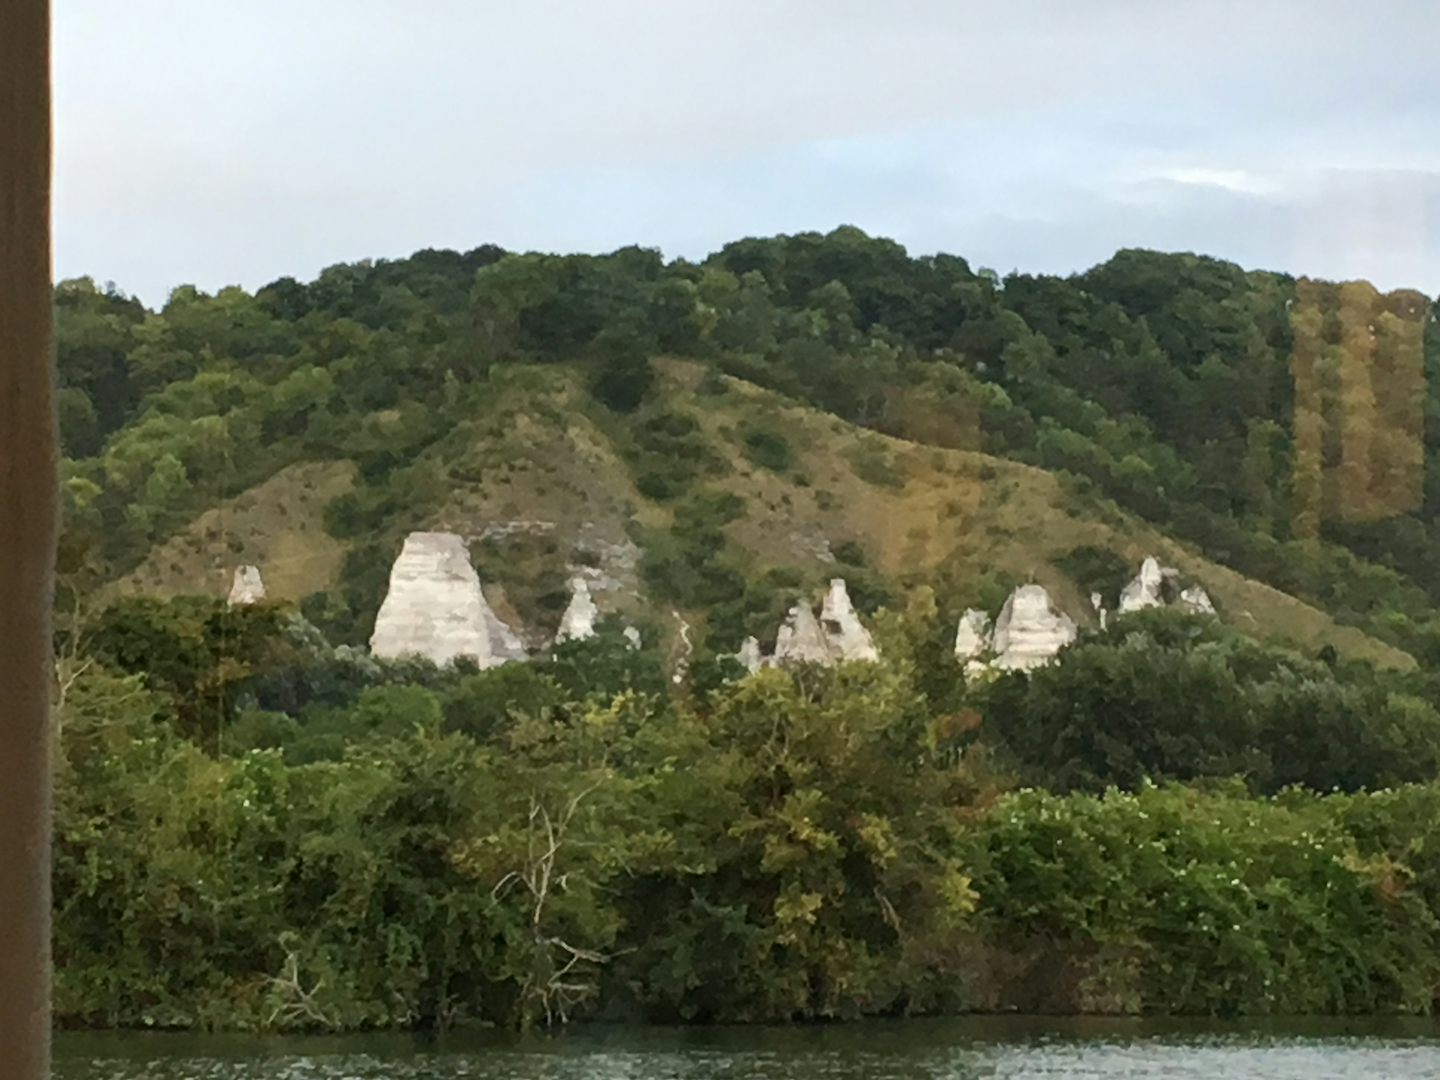 Limestone cliffs along the Seine